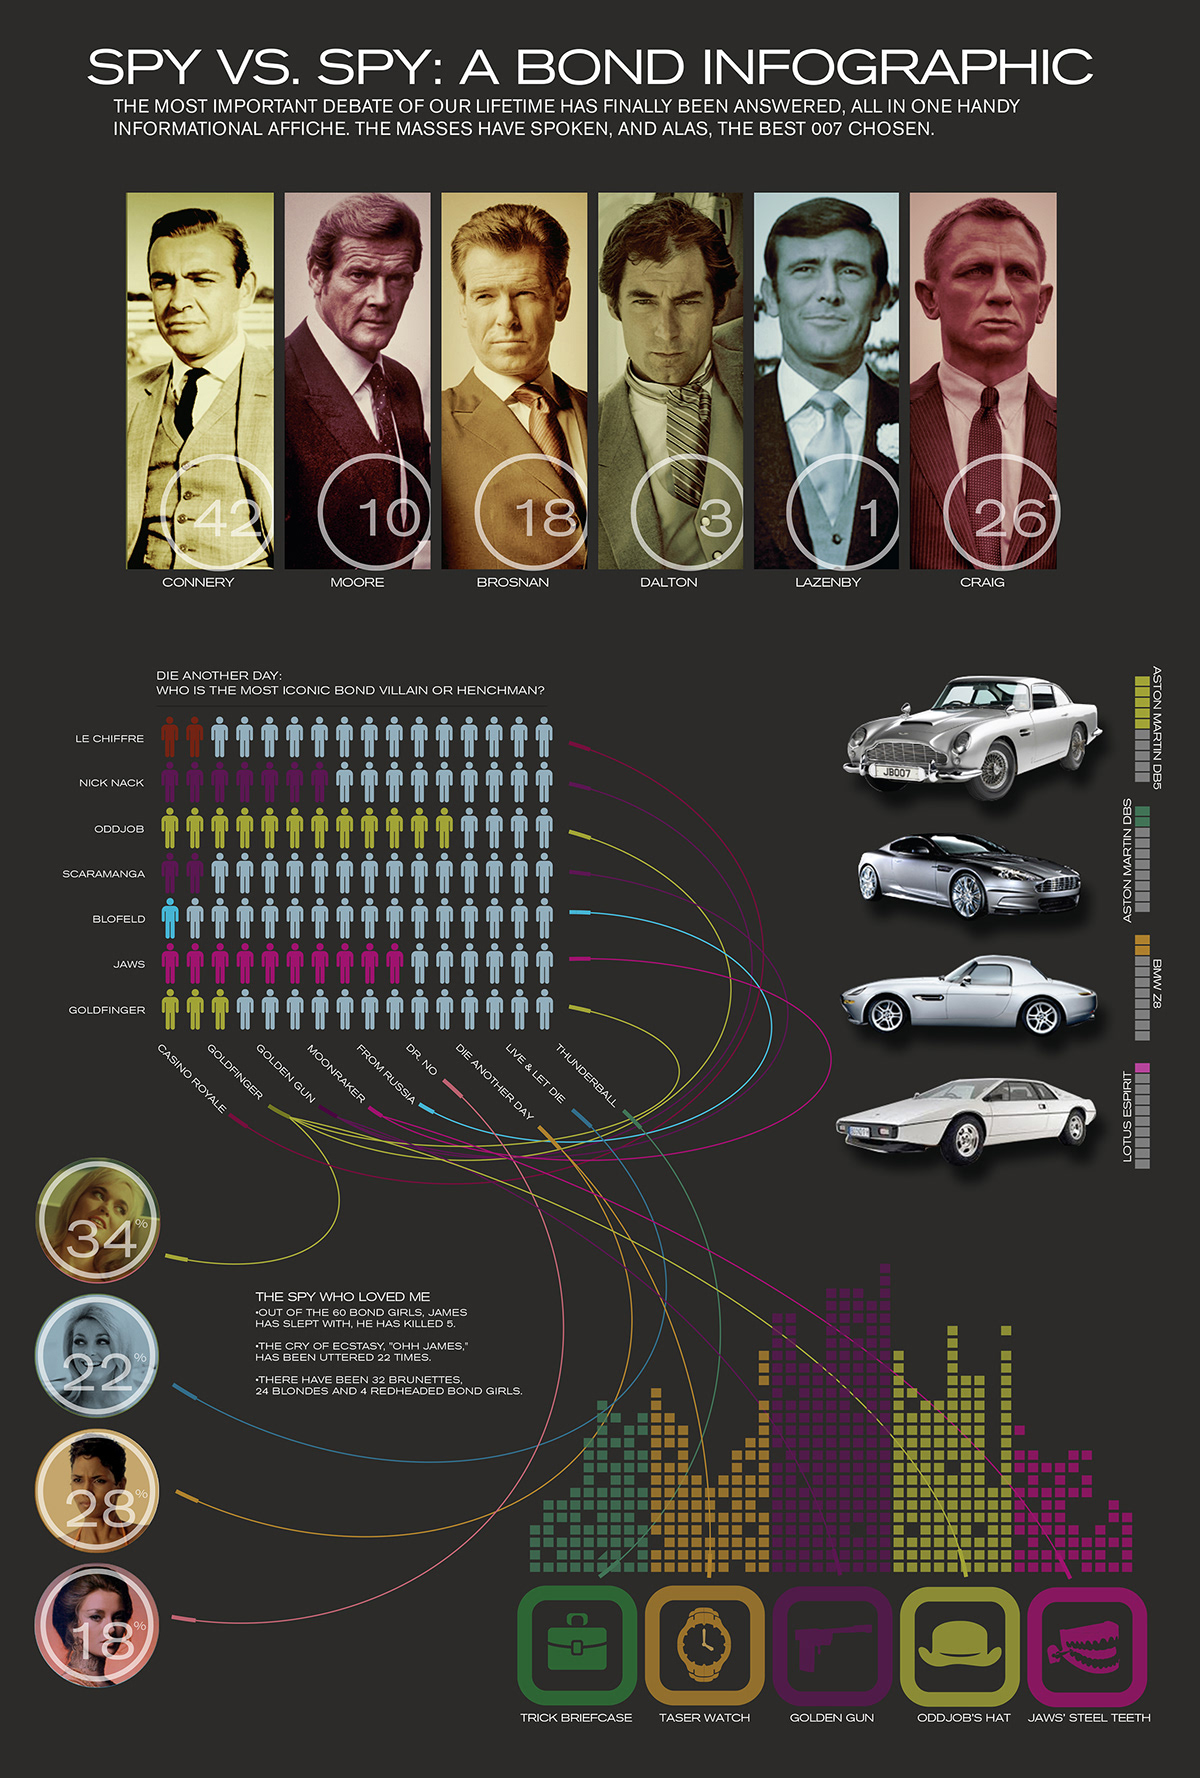 james bond skyfall  Bond girls  007  typography  infographics  information graphic  visual concepts  KU